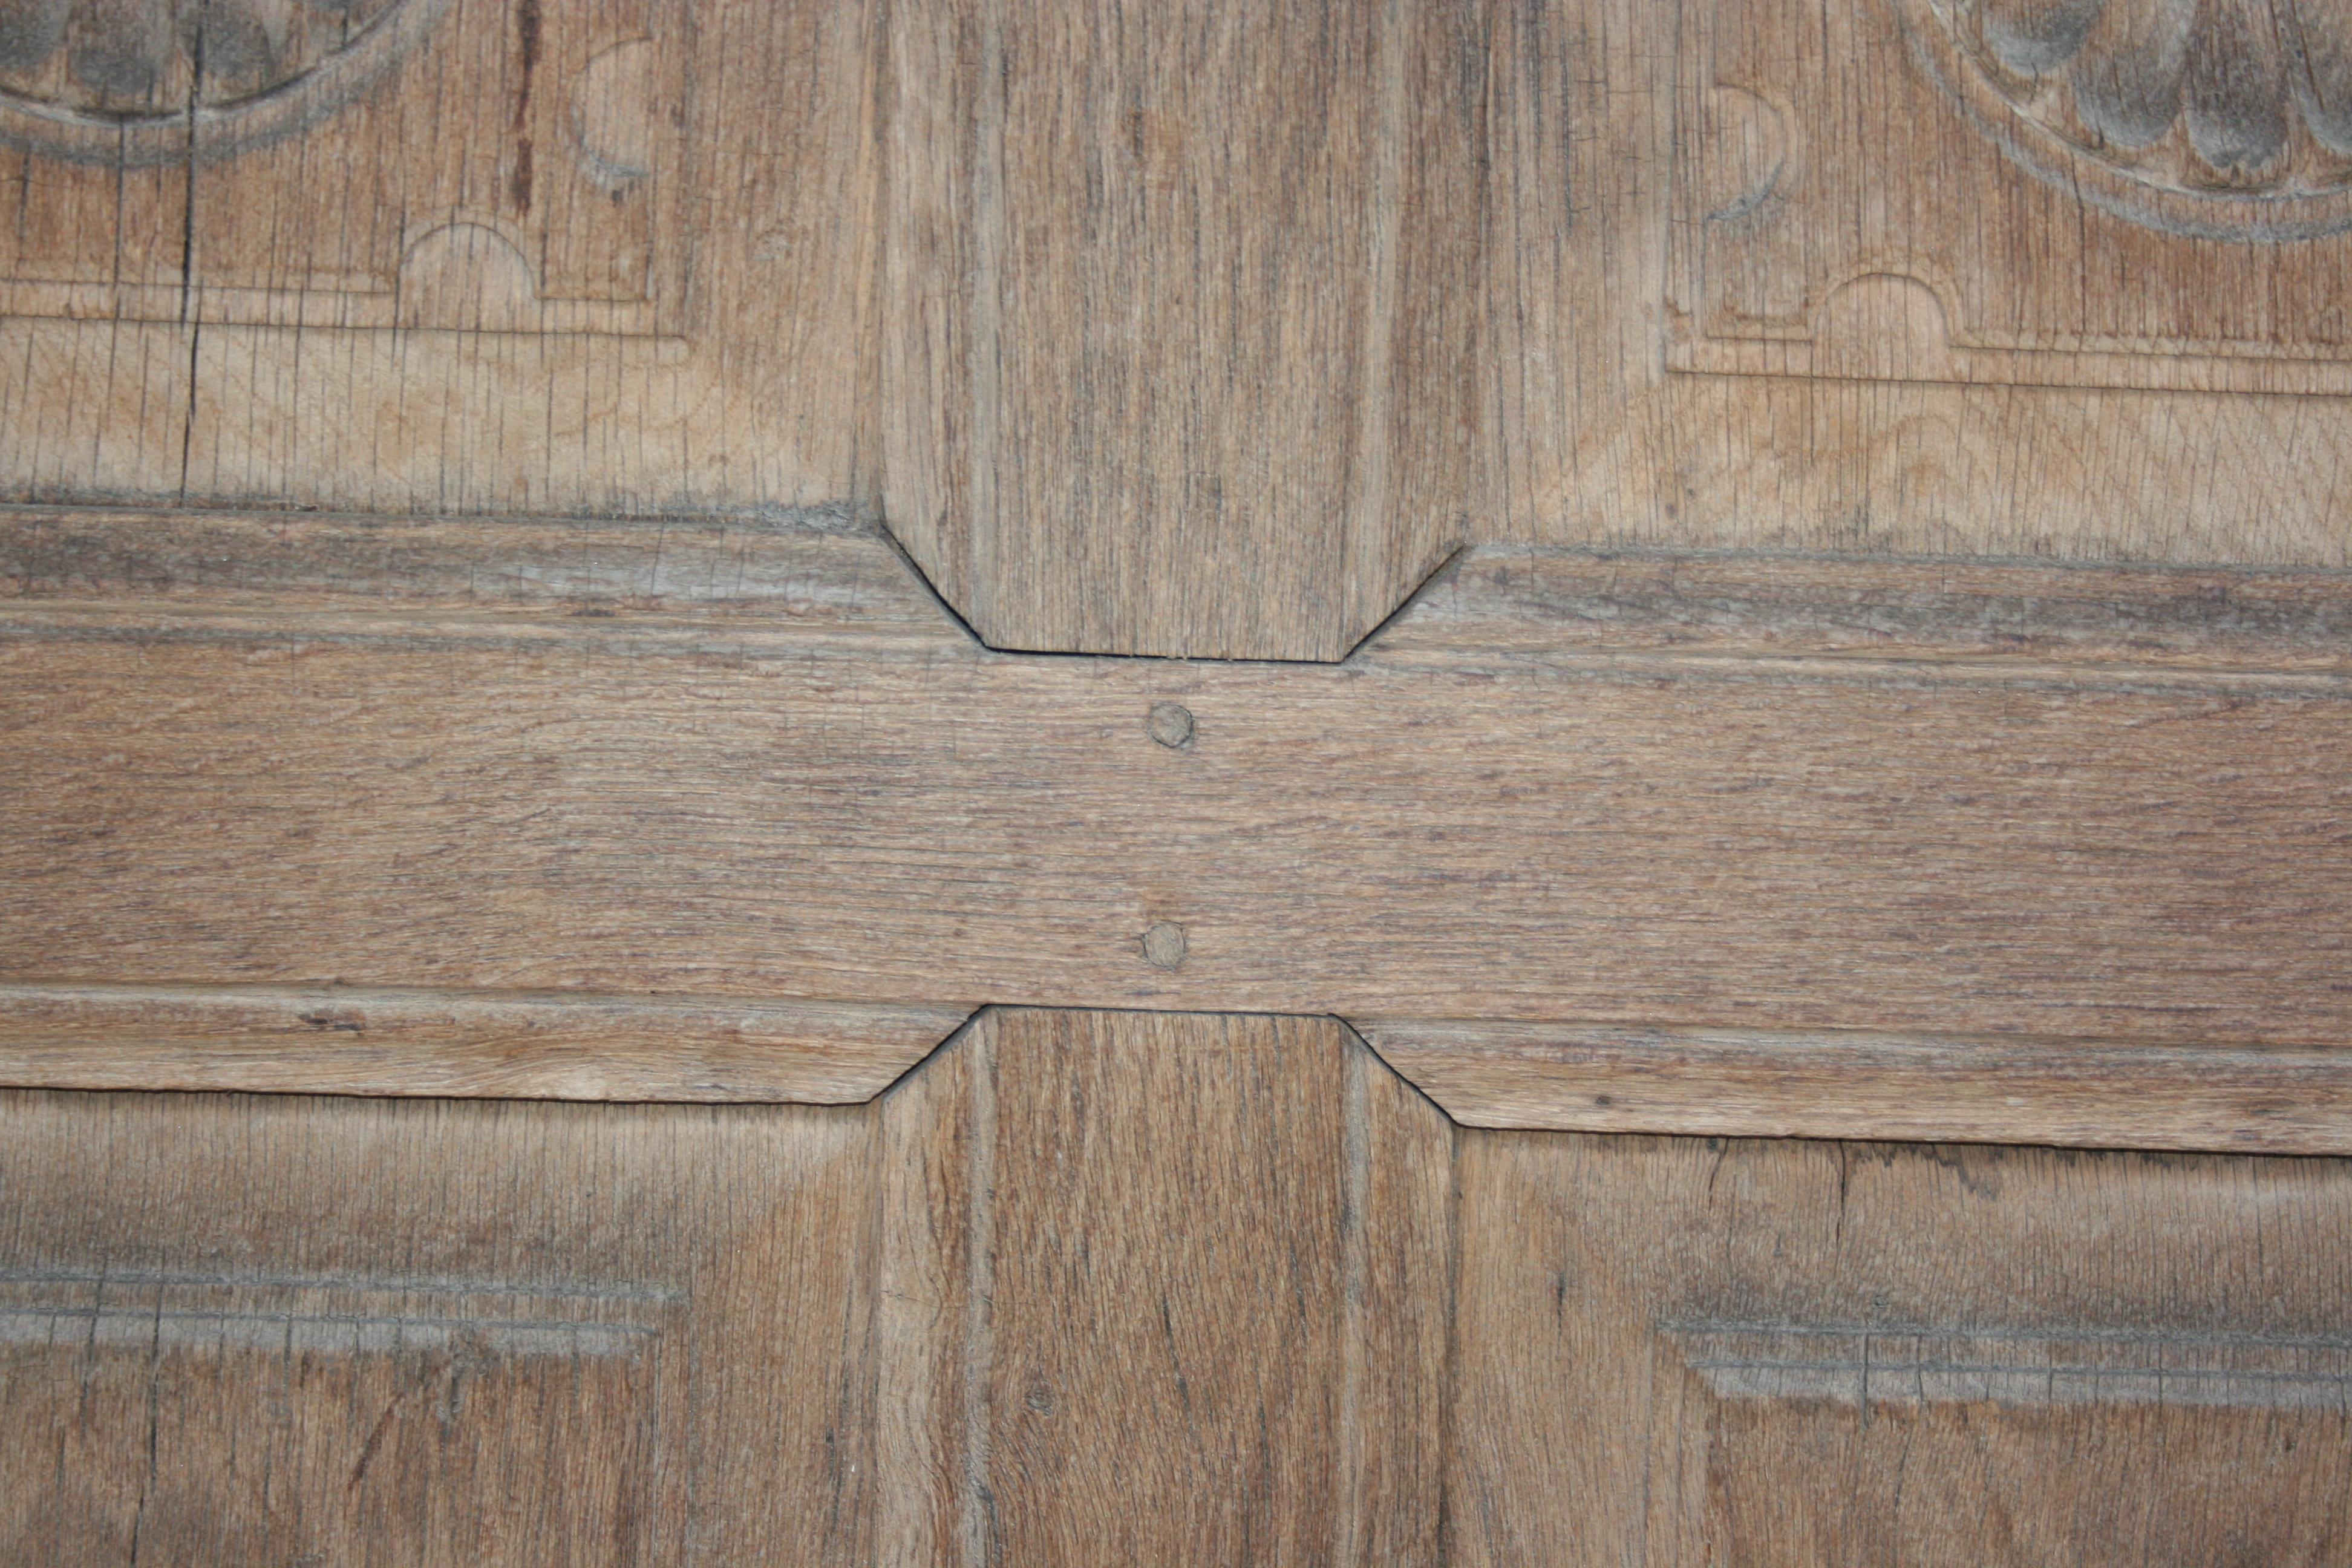 Antique German Door Made of Oak and Fir Wood For Sale 4